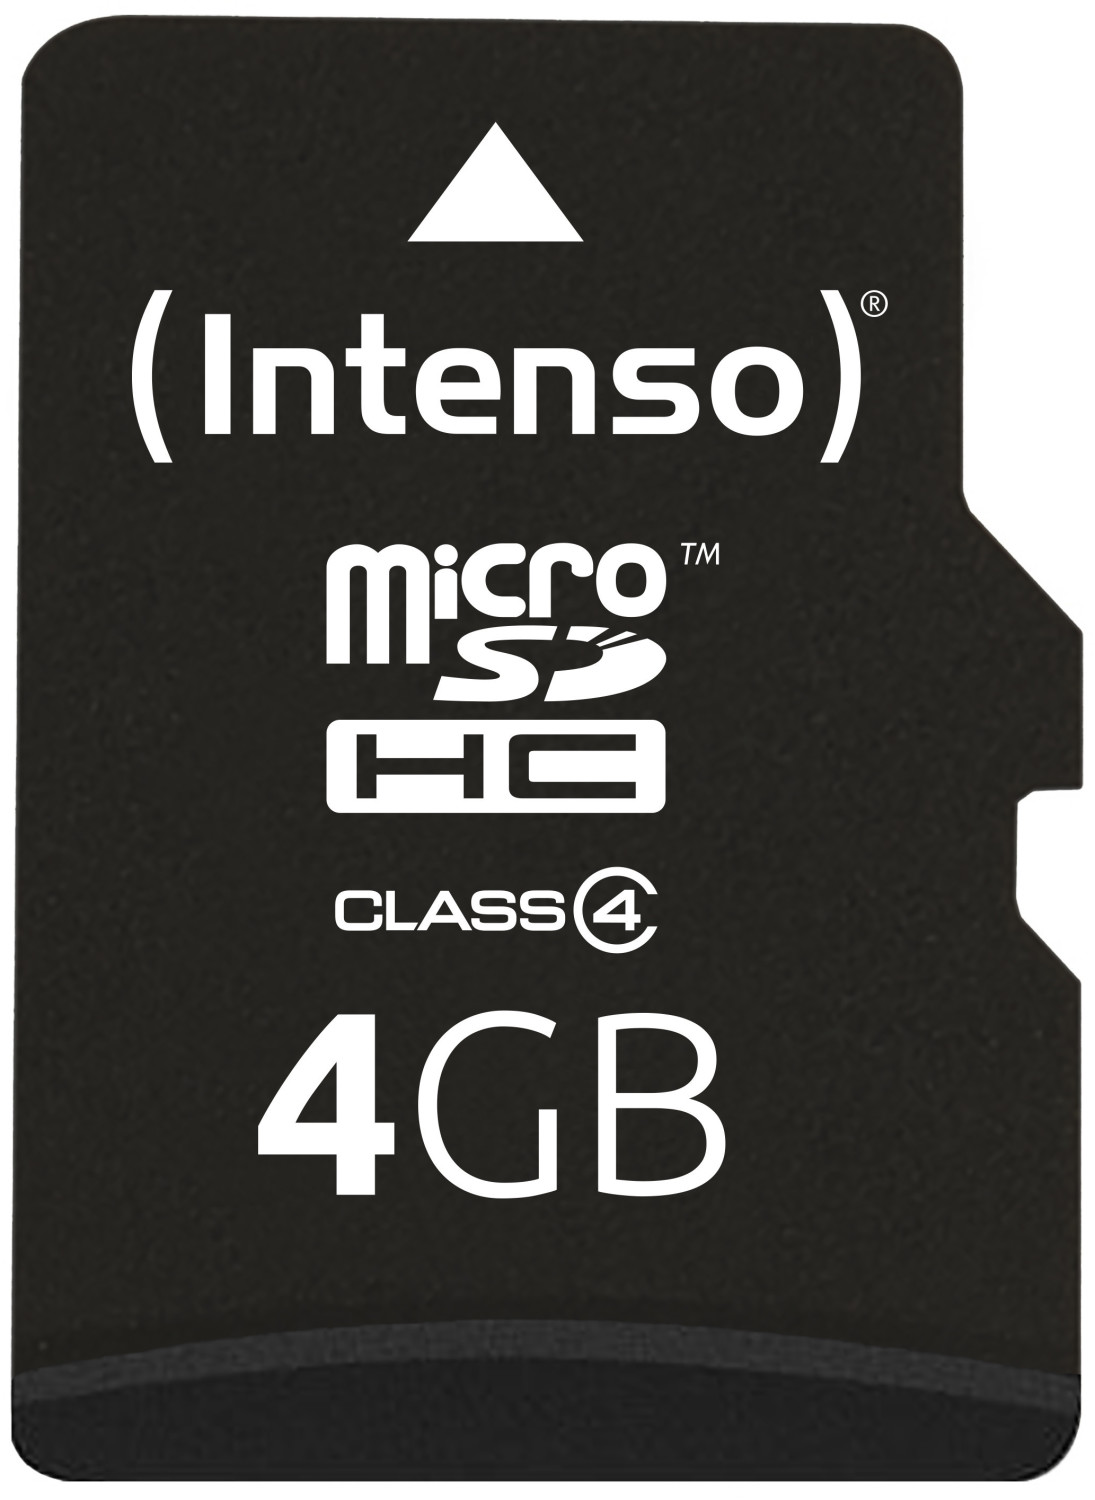 Intenso microSD 4GB Class 2 (3403450)